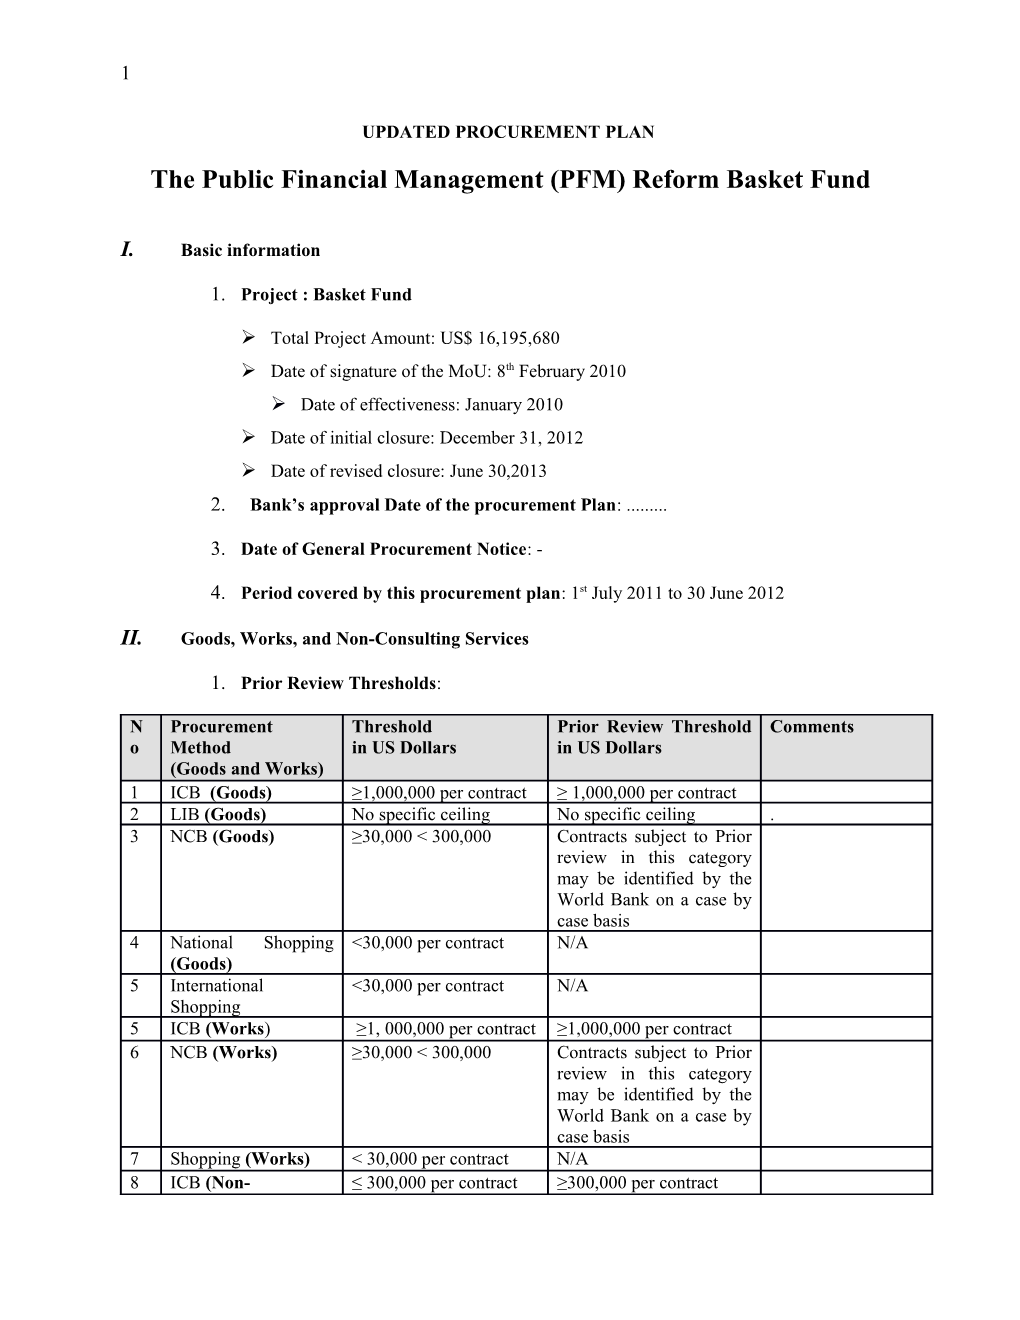 The Public Financial Management (PFM) Reform Basket Fund